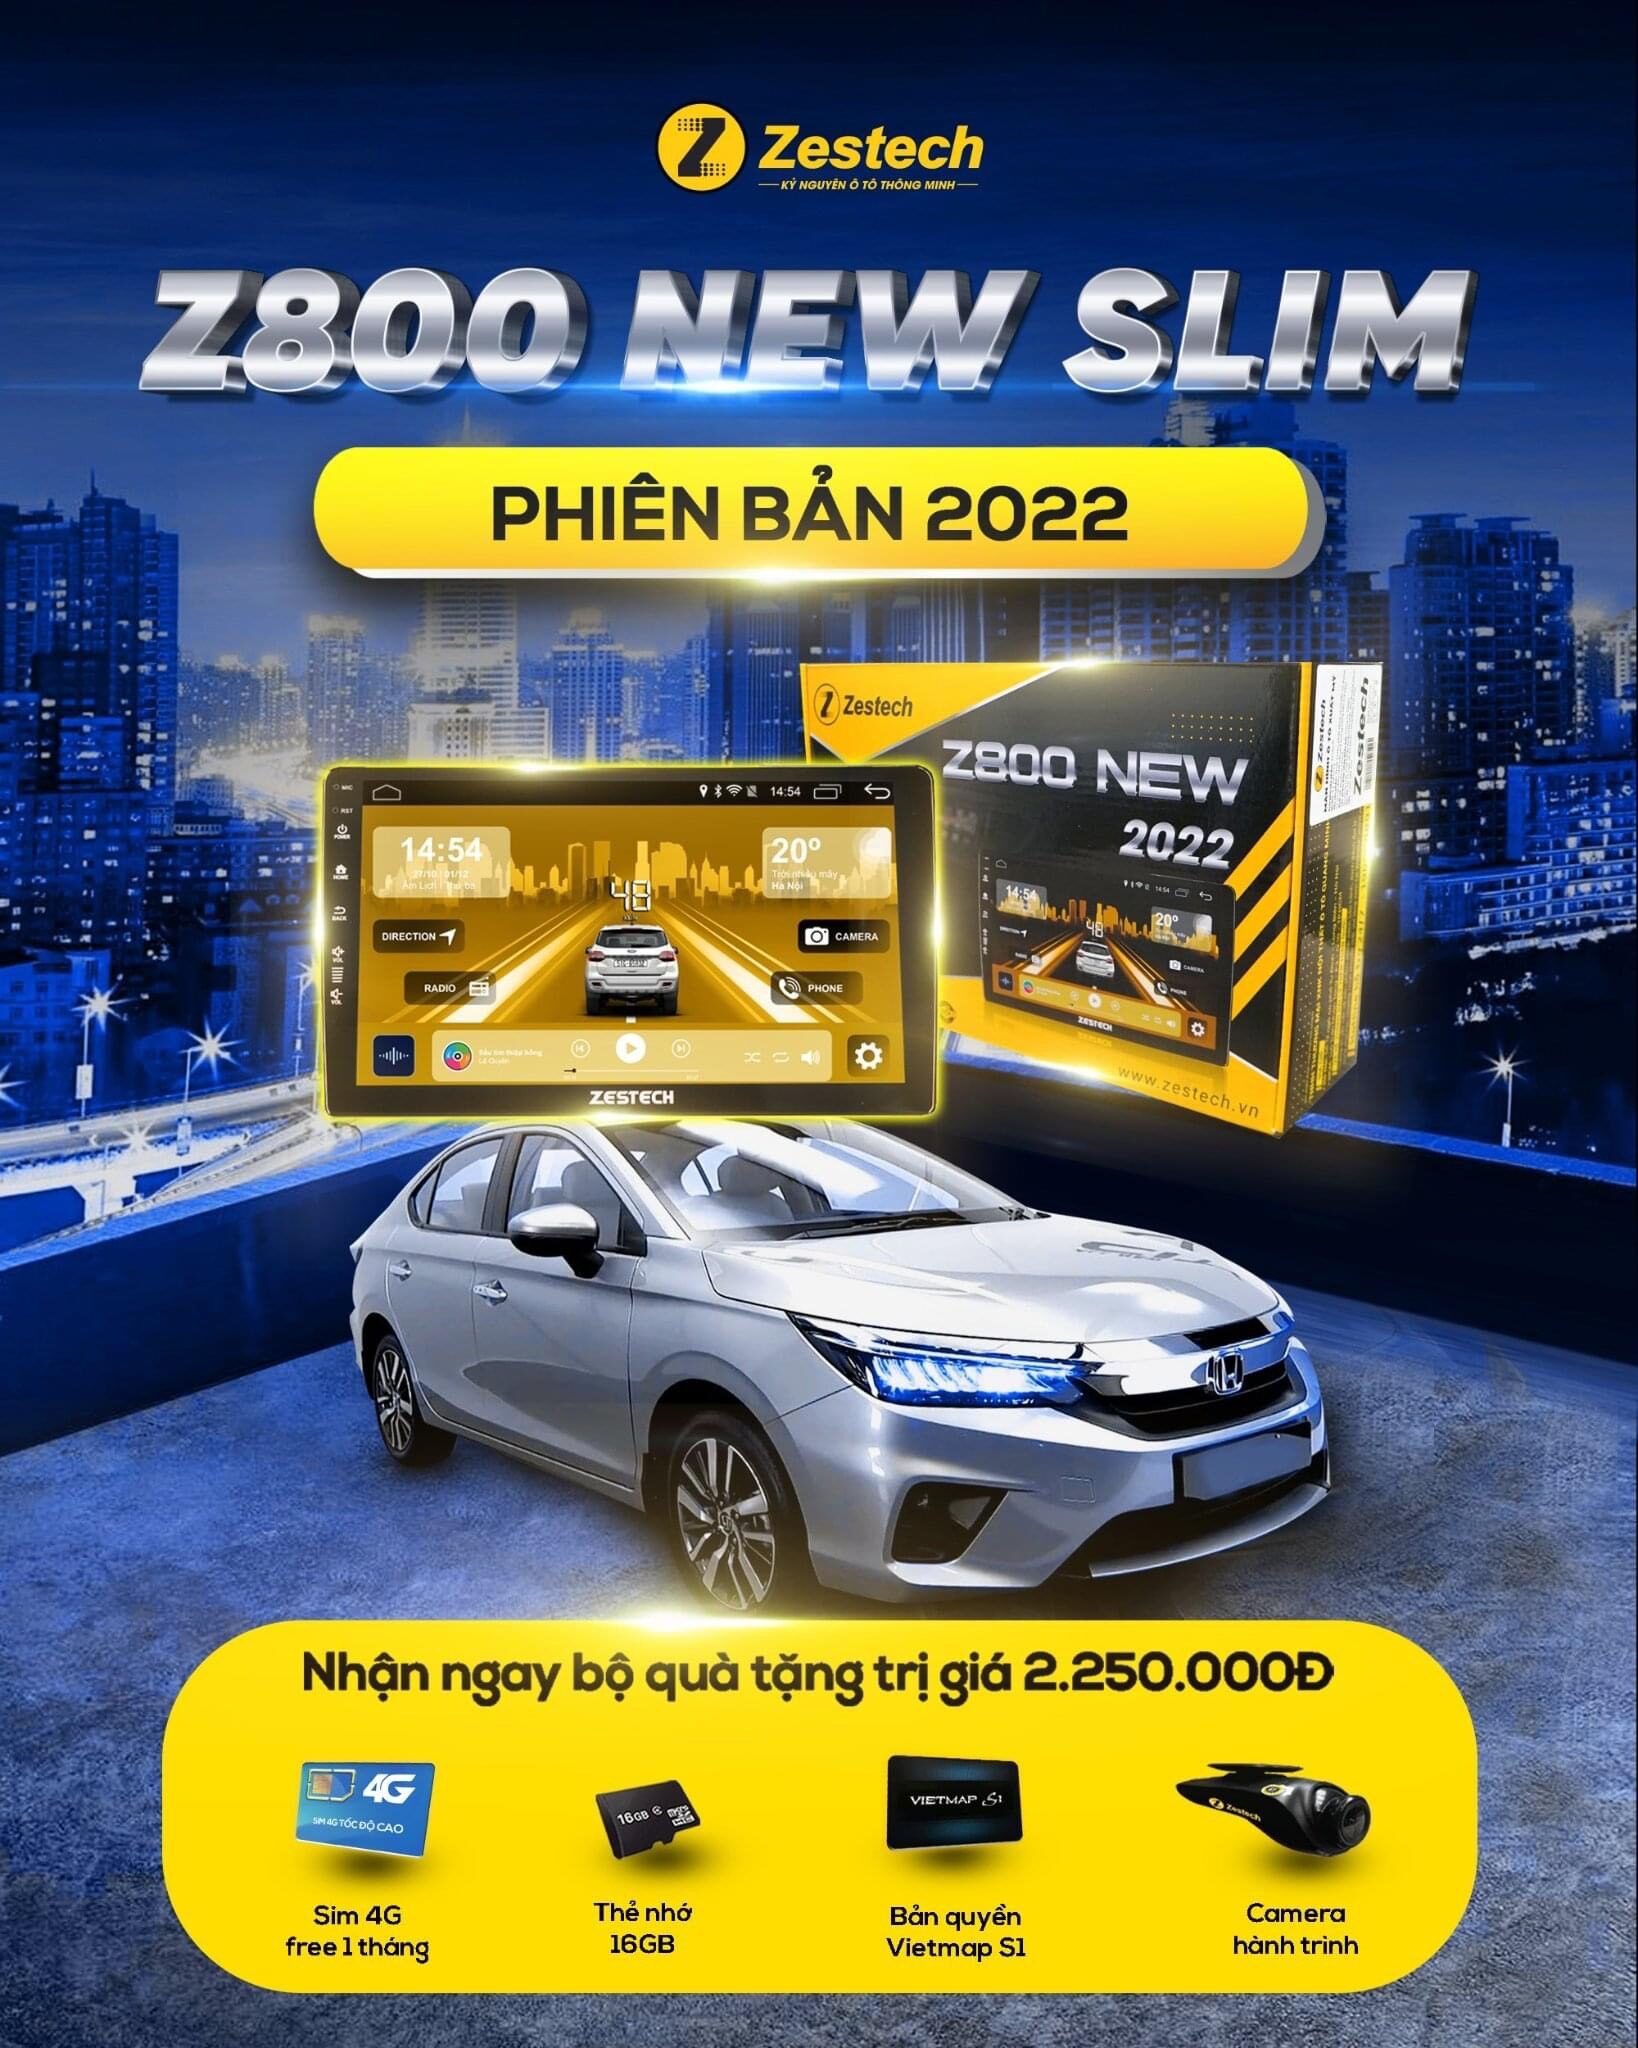 man-hinh-zestech-z800-new-slim-3948068